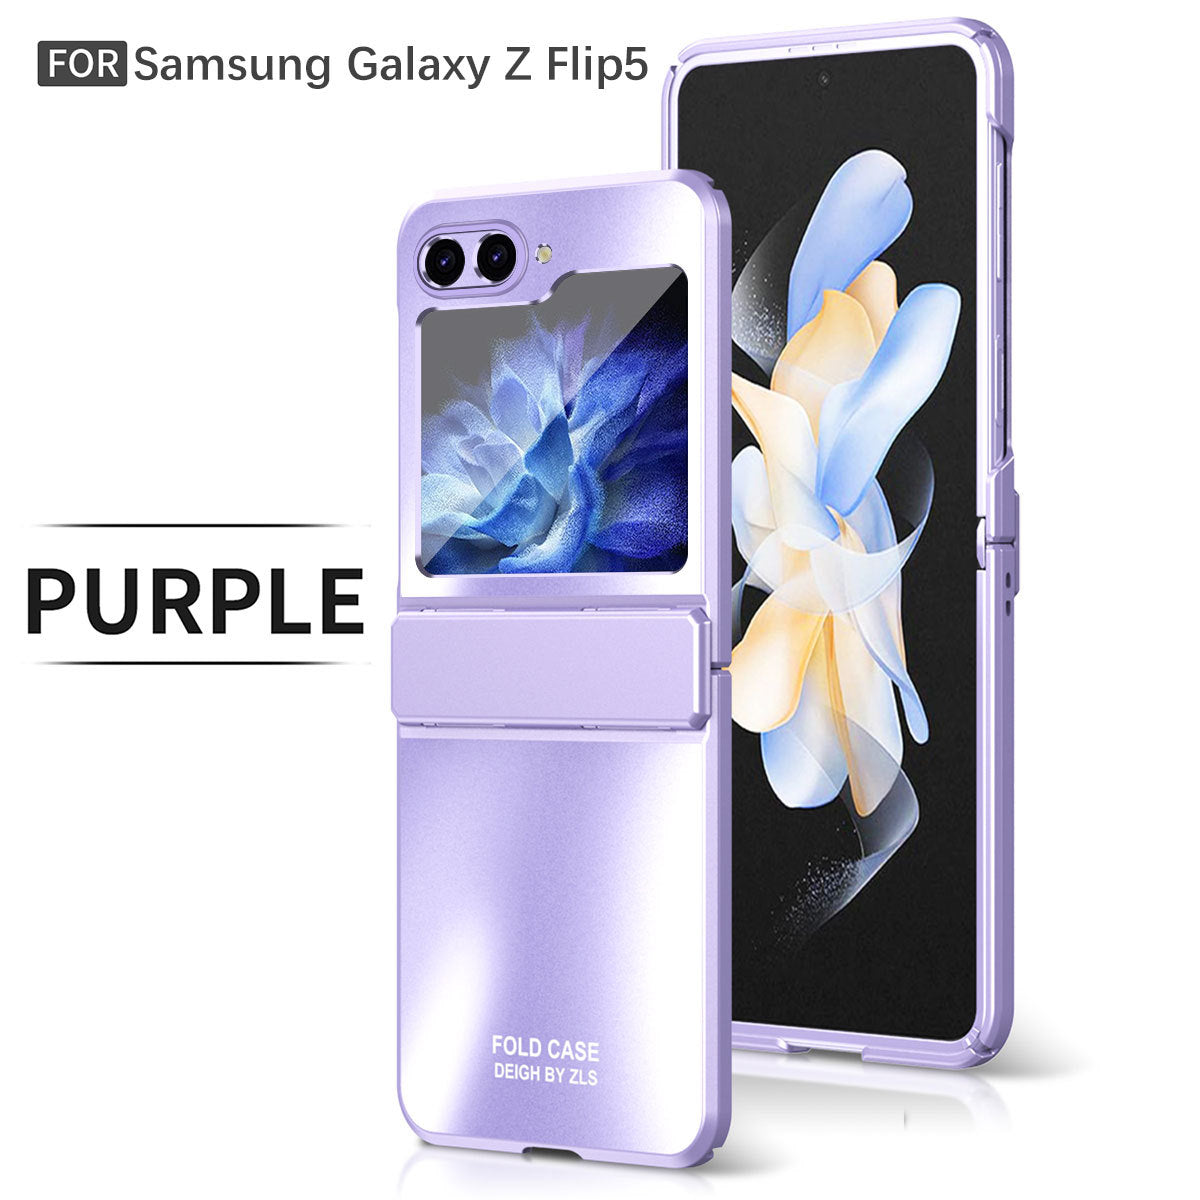 Frosted Plating Phone Case For Samsung Galaxy Z Flip5 Flip4 Flip3 5G